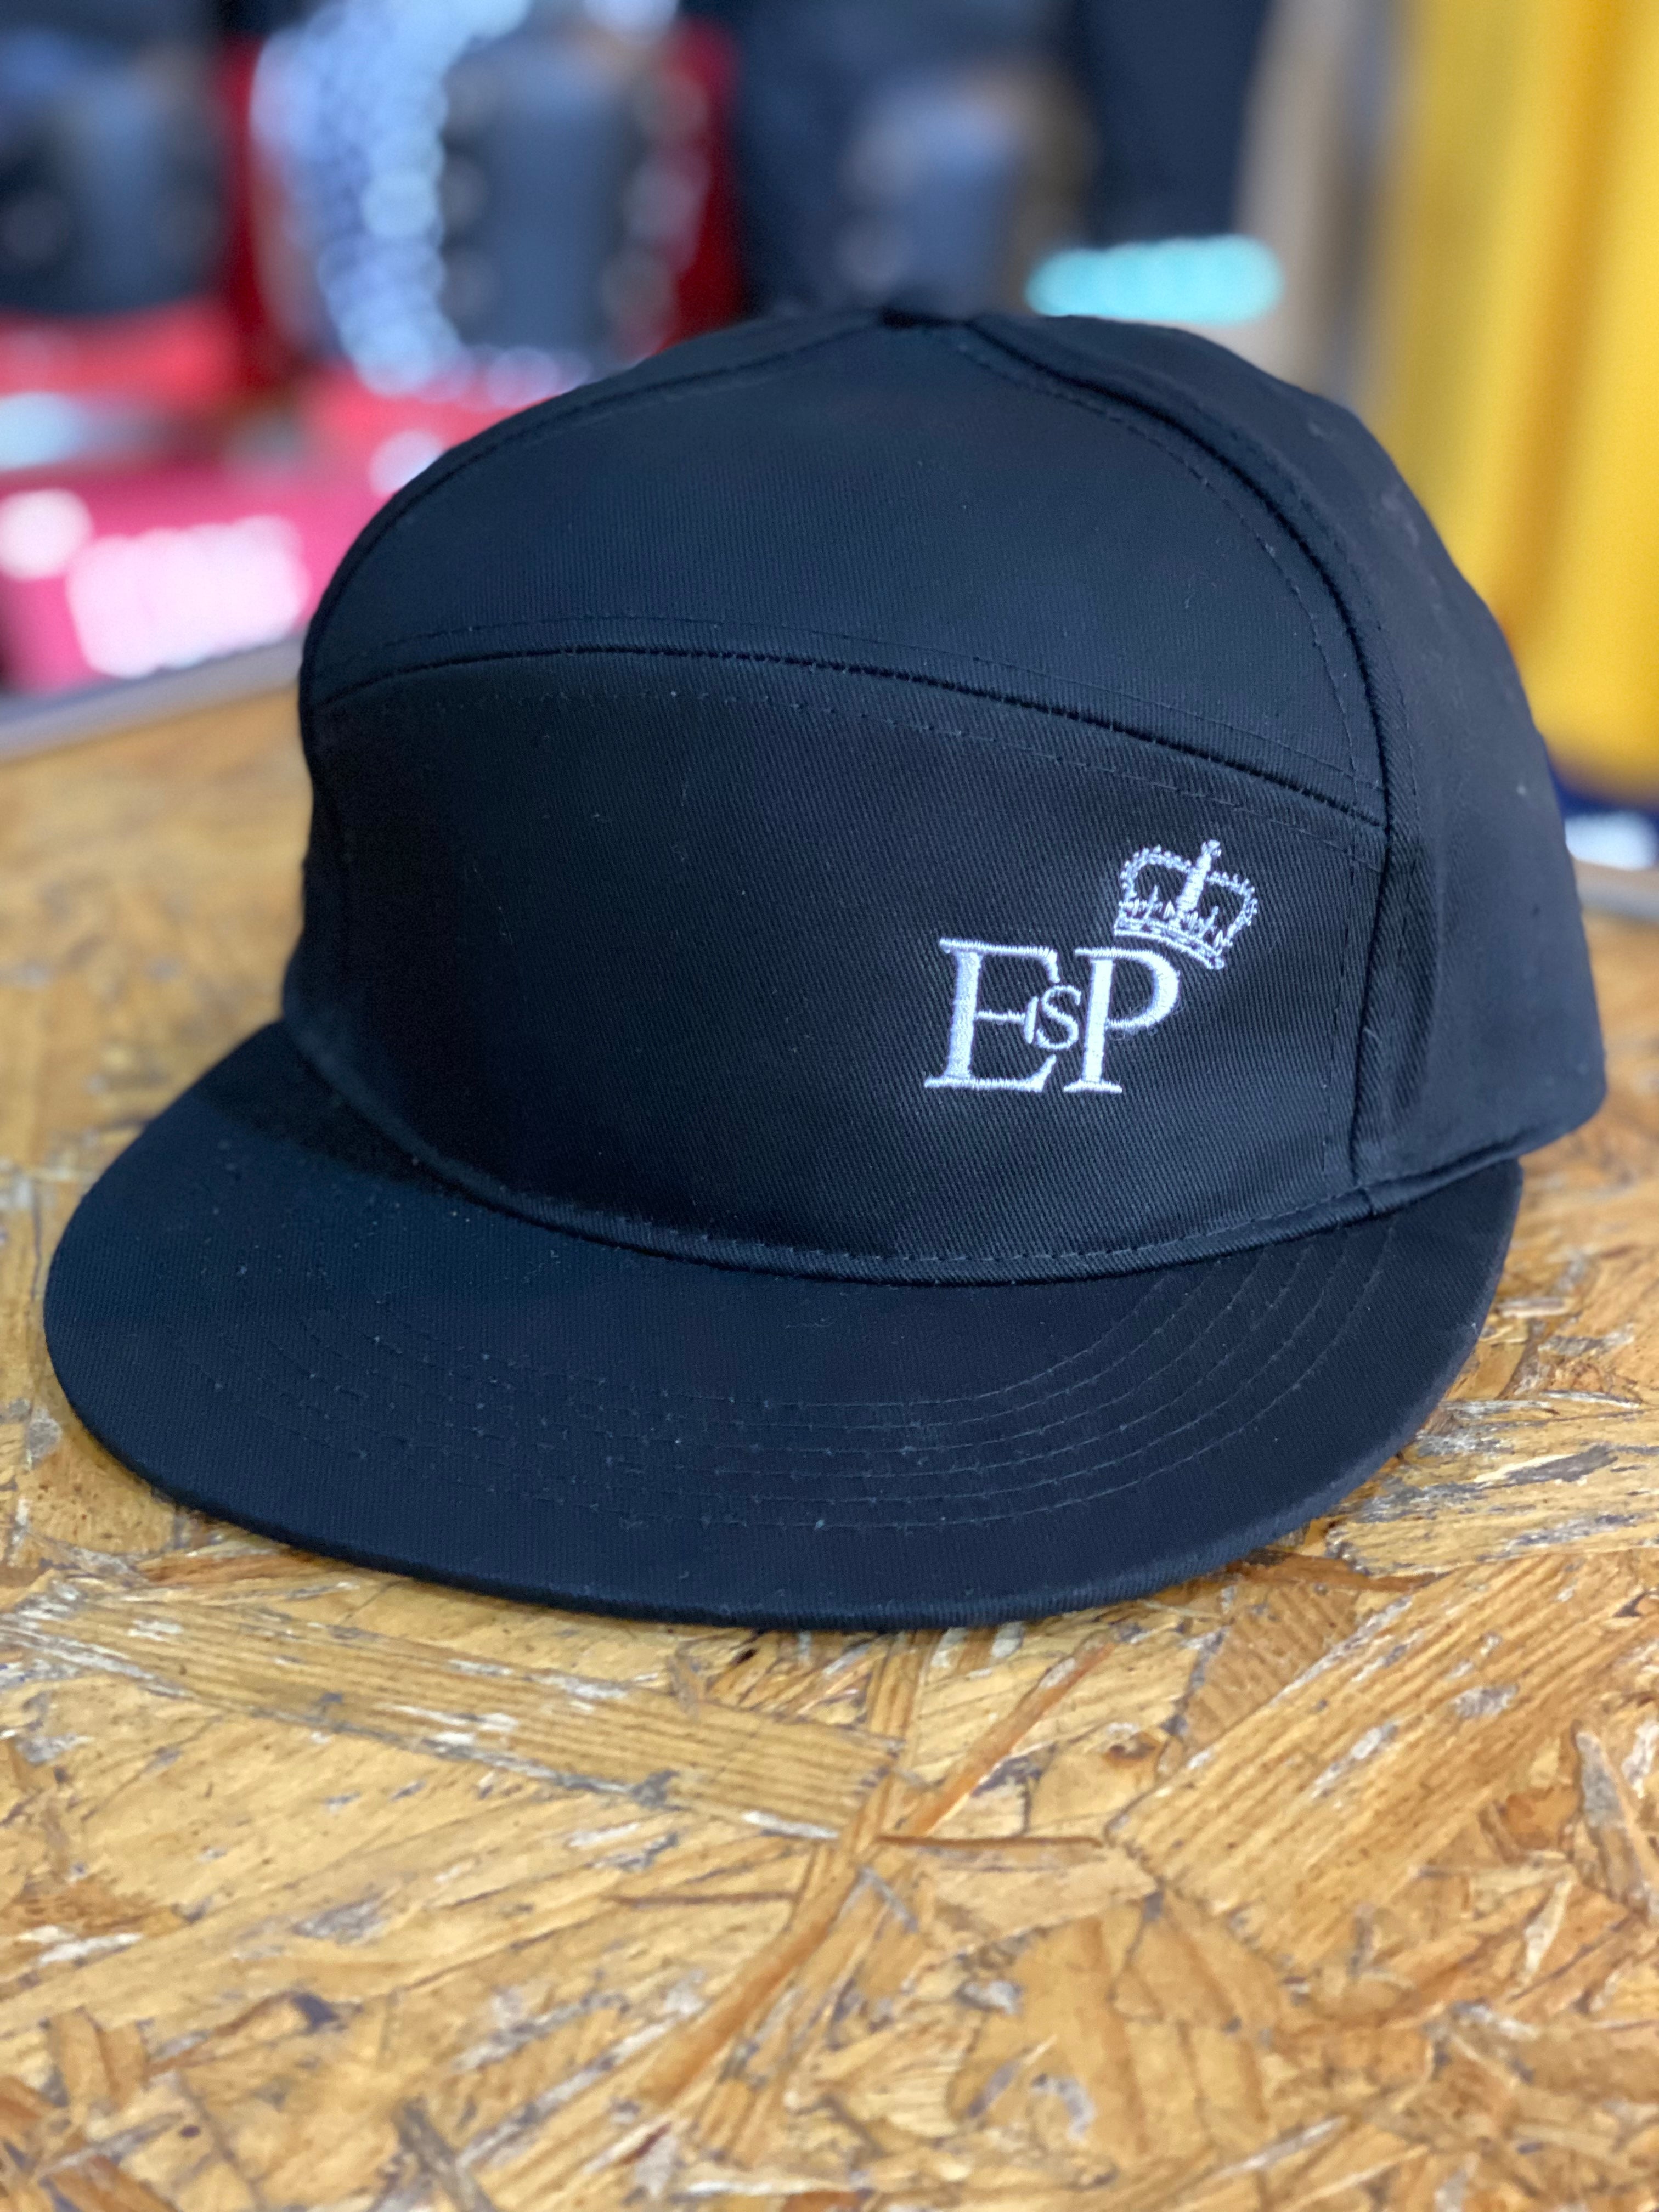 ESP Royalty Pitcher 6 Panel Cap